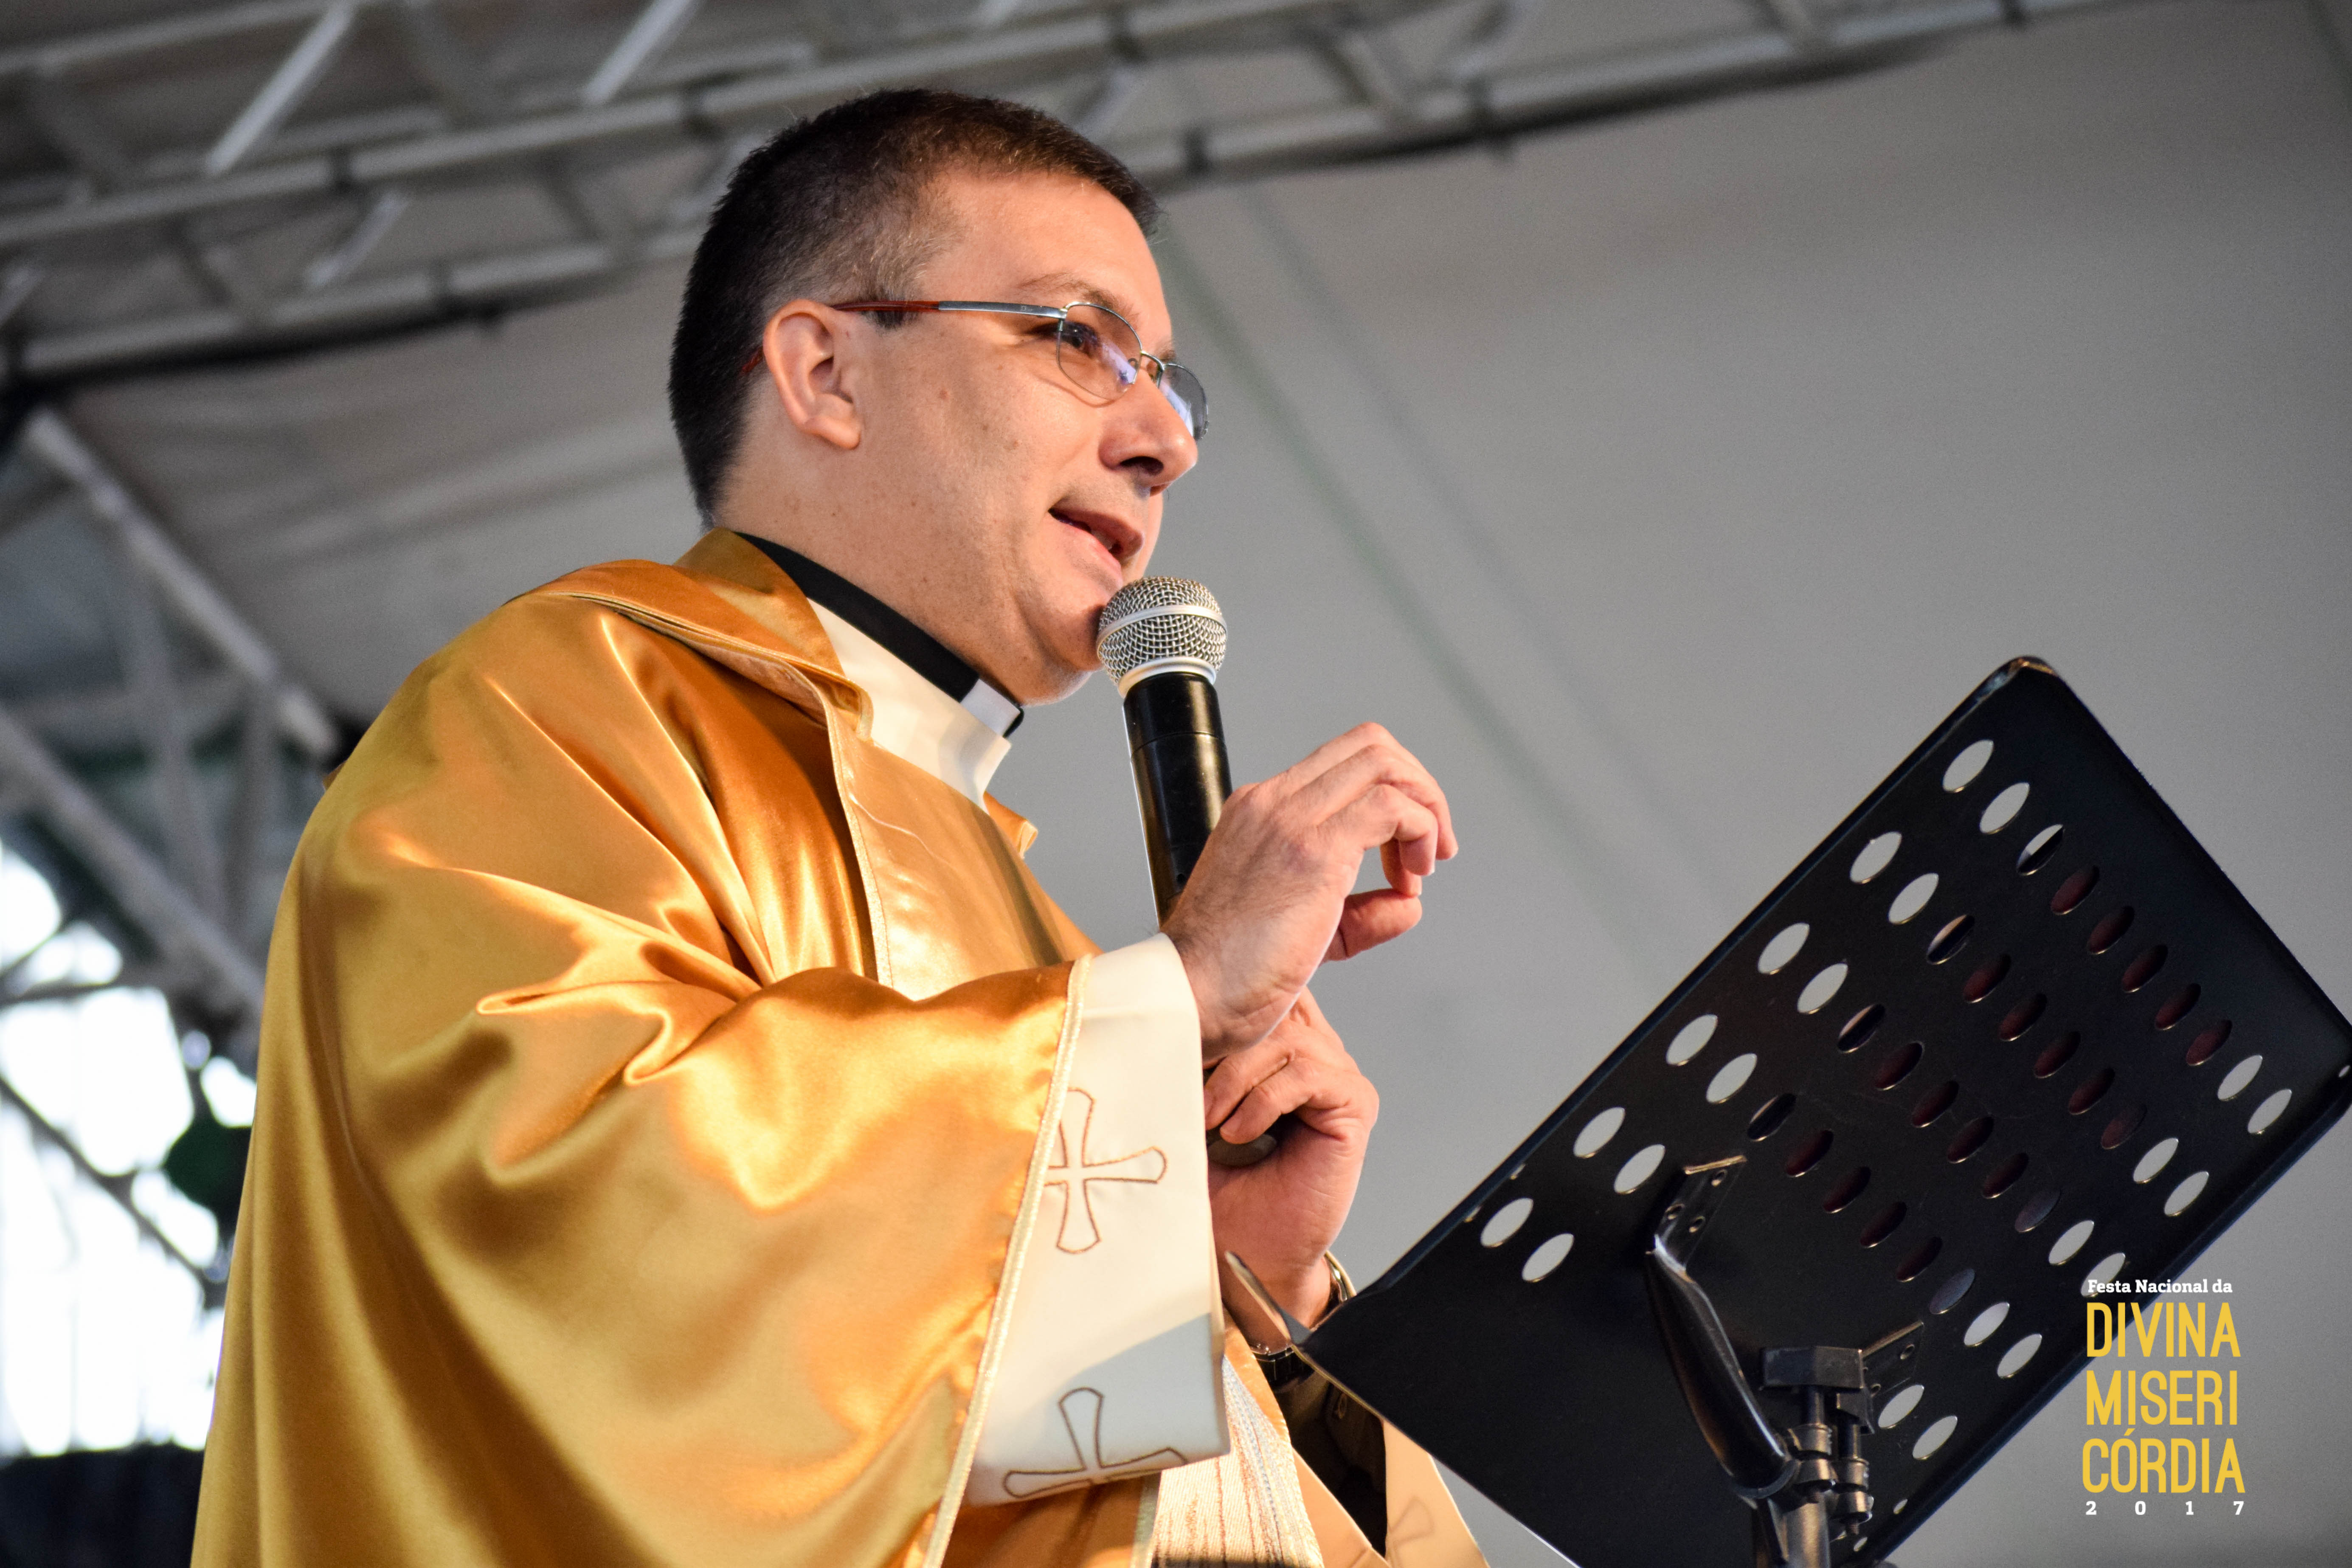 Padre Jair conduzirá a Novena à Divina Misericórdia